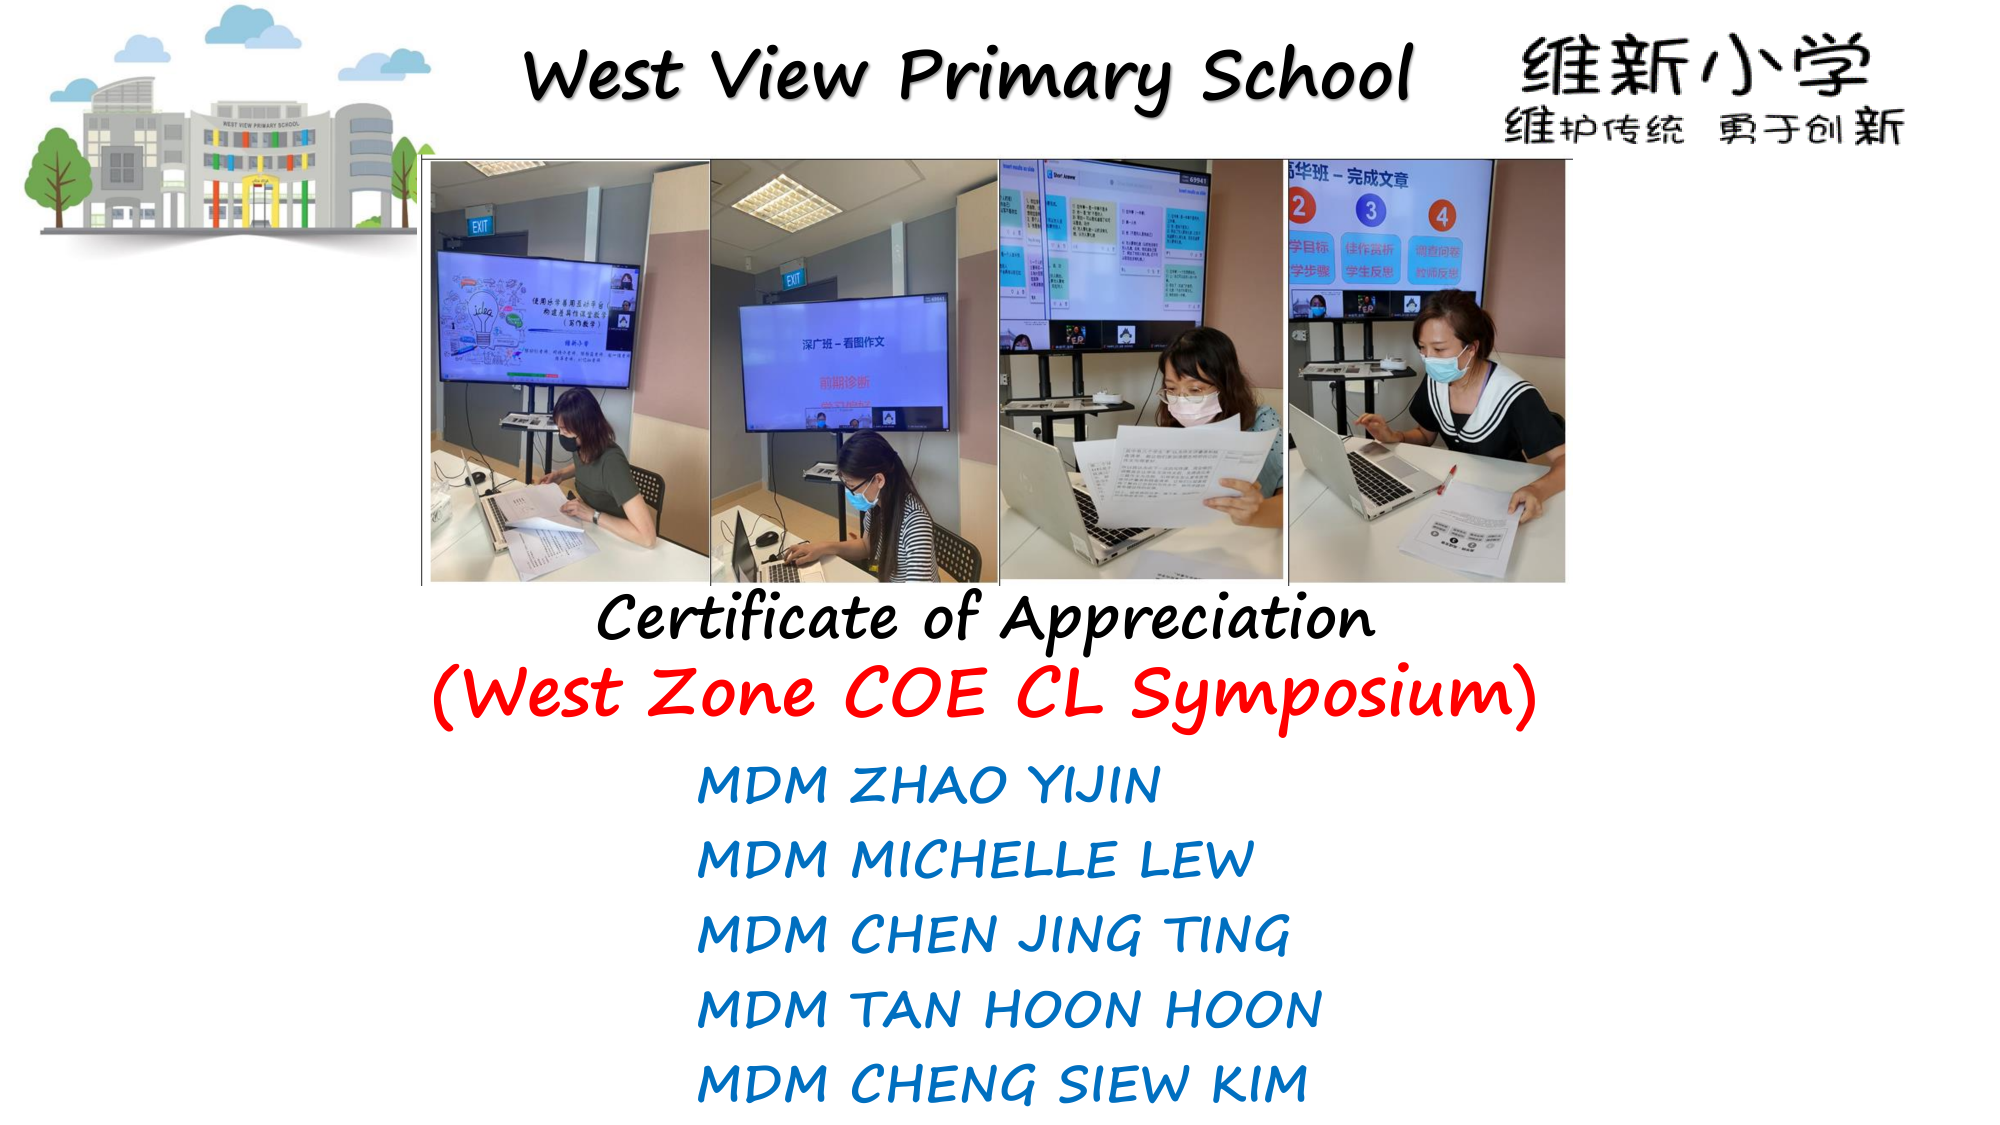 West Zone COE CL Symposium